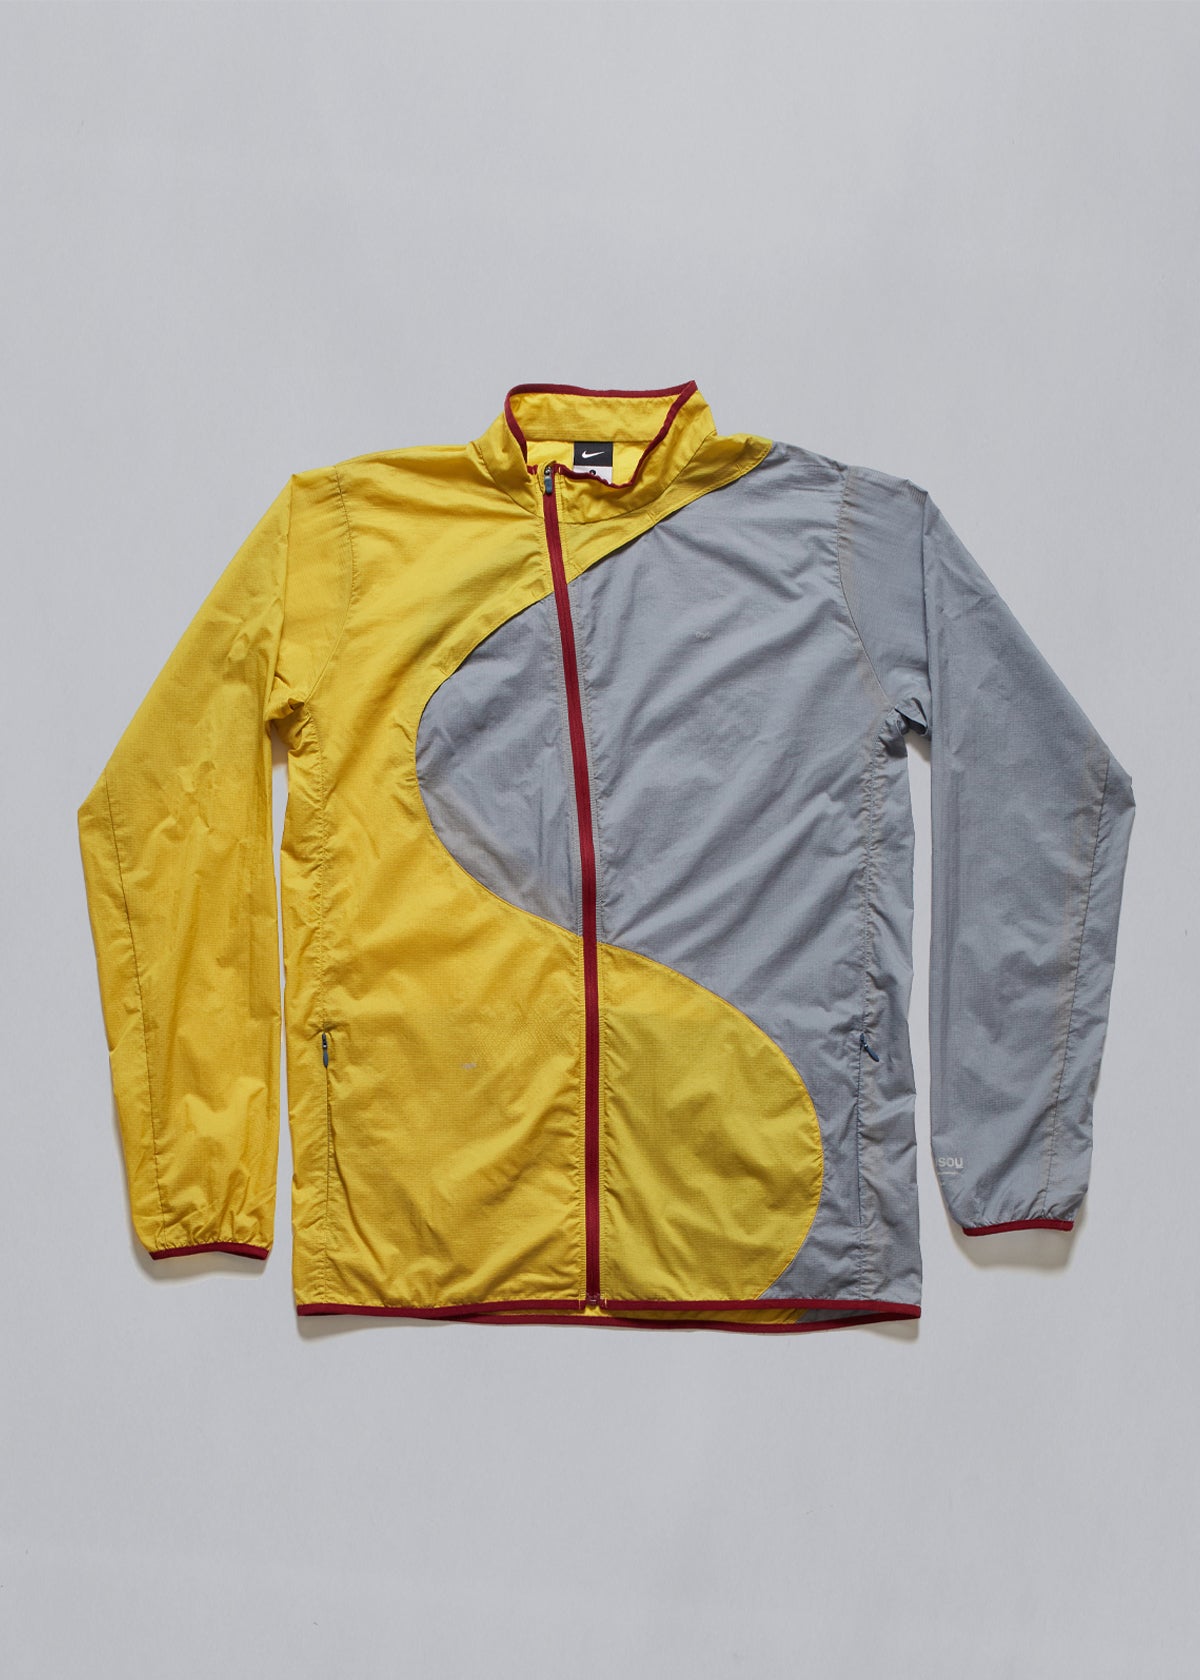 Nike/Undercover Gyakusou Curve Split Jacket SS2014 - Large